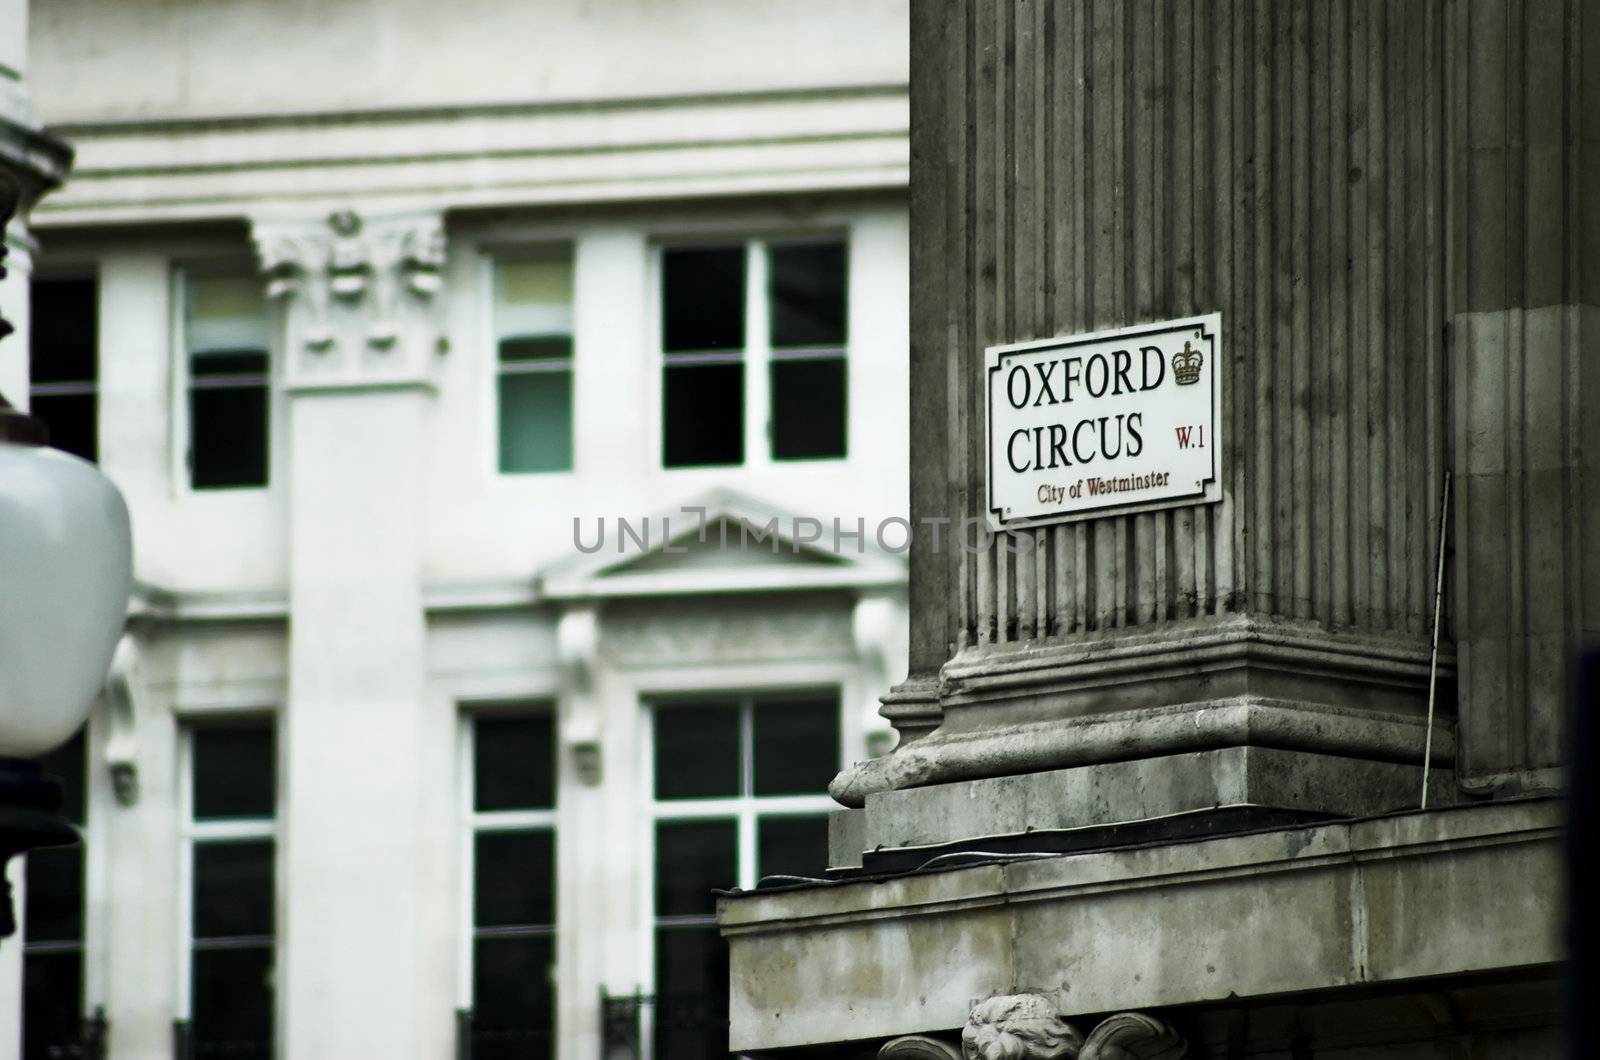 london street sign